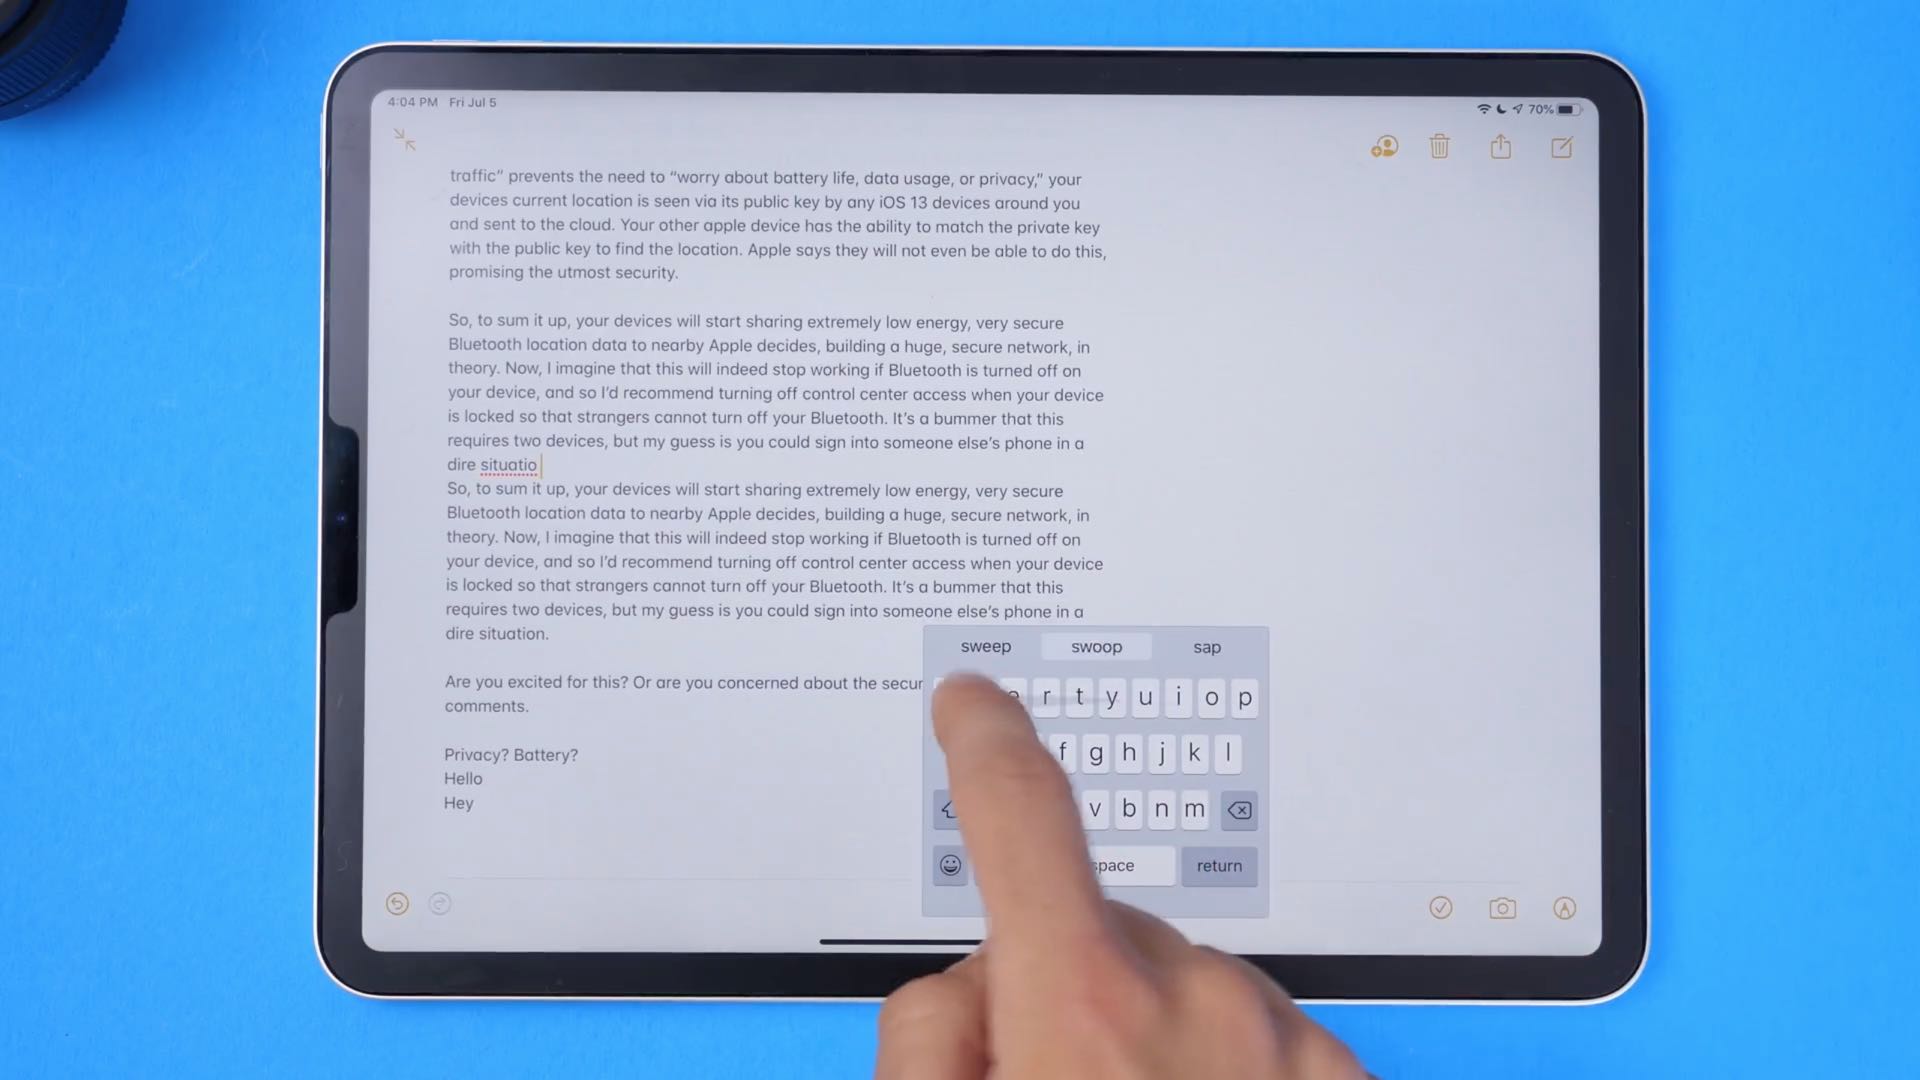 iPadOS-gestures-keyboard-small-swipe-typing-001